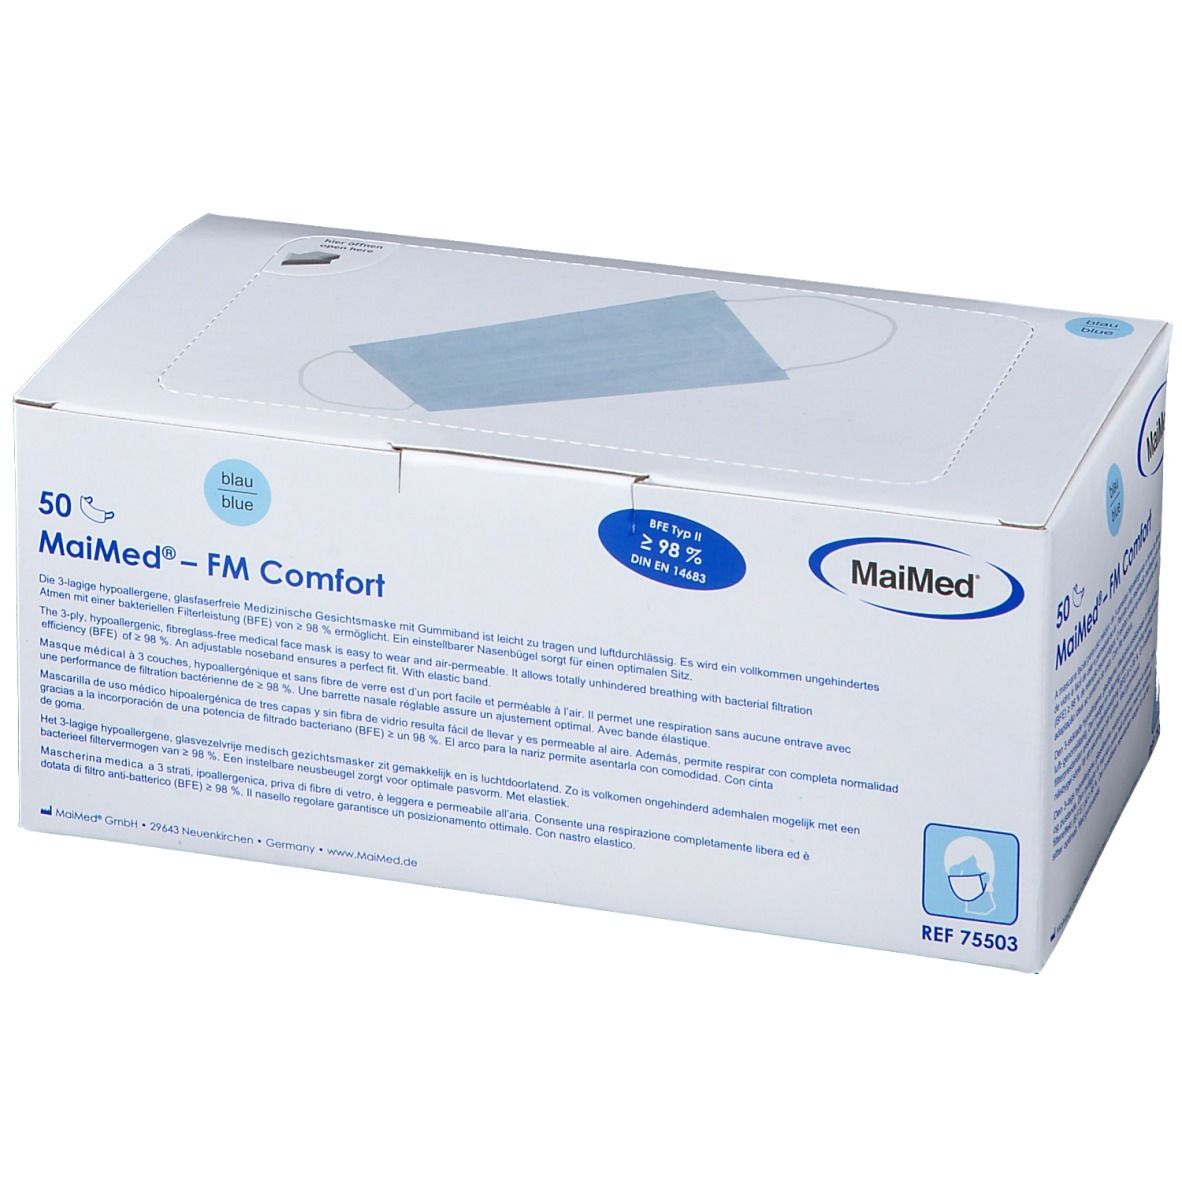 MaiMed® FM Comfort bleu Type II